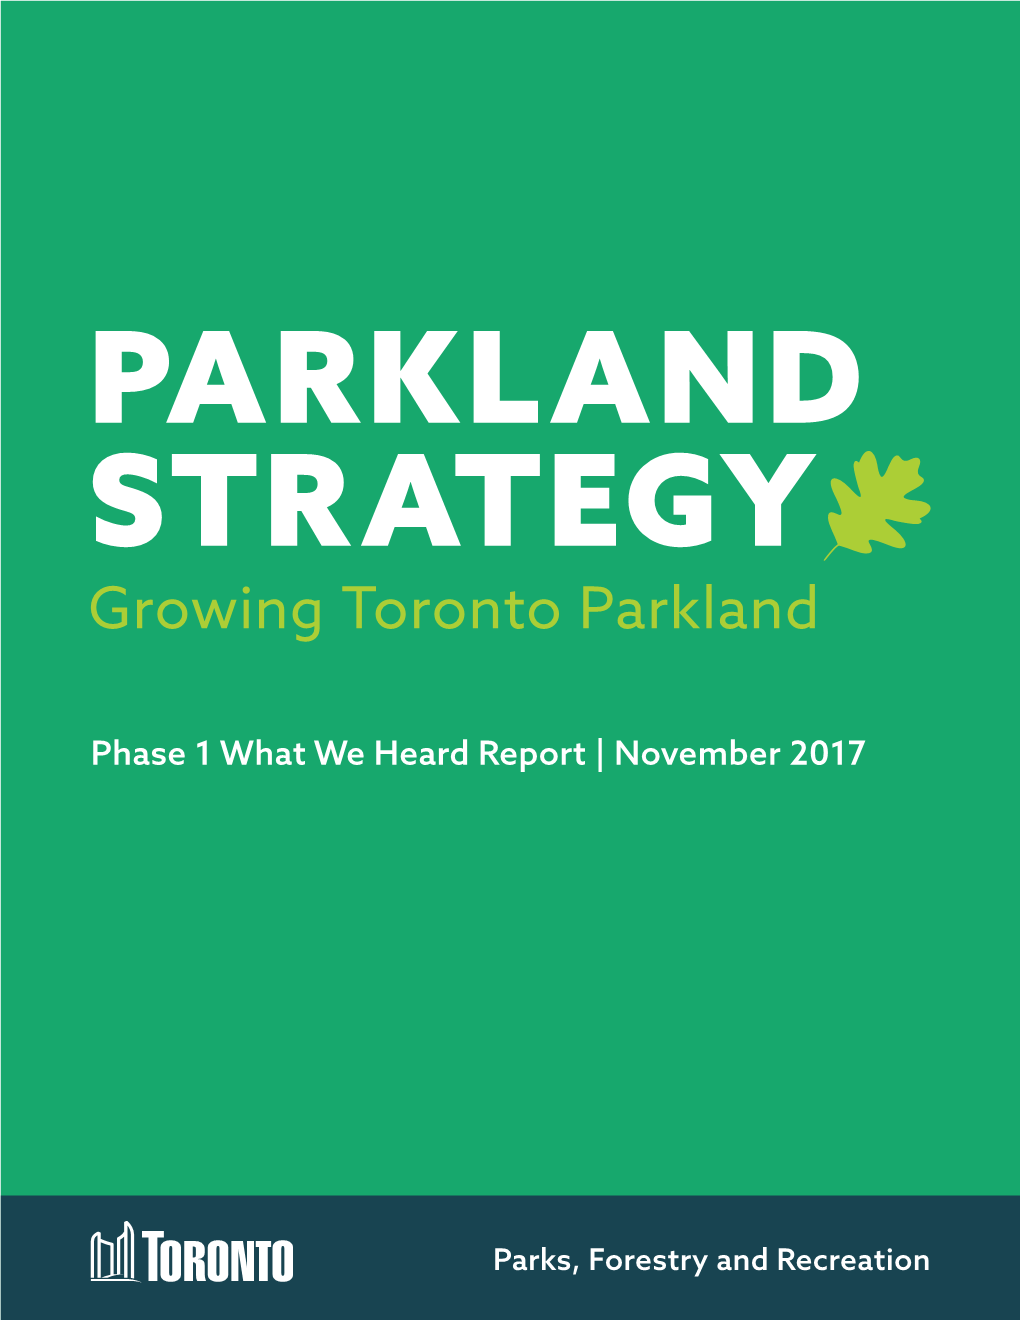 Parkland Strategy Growing Toronto Parkland